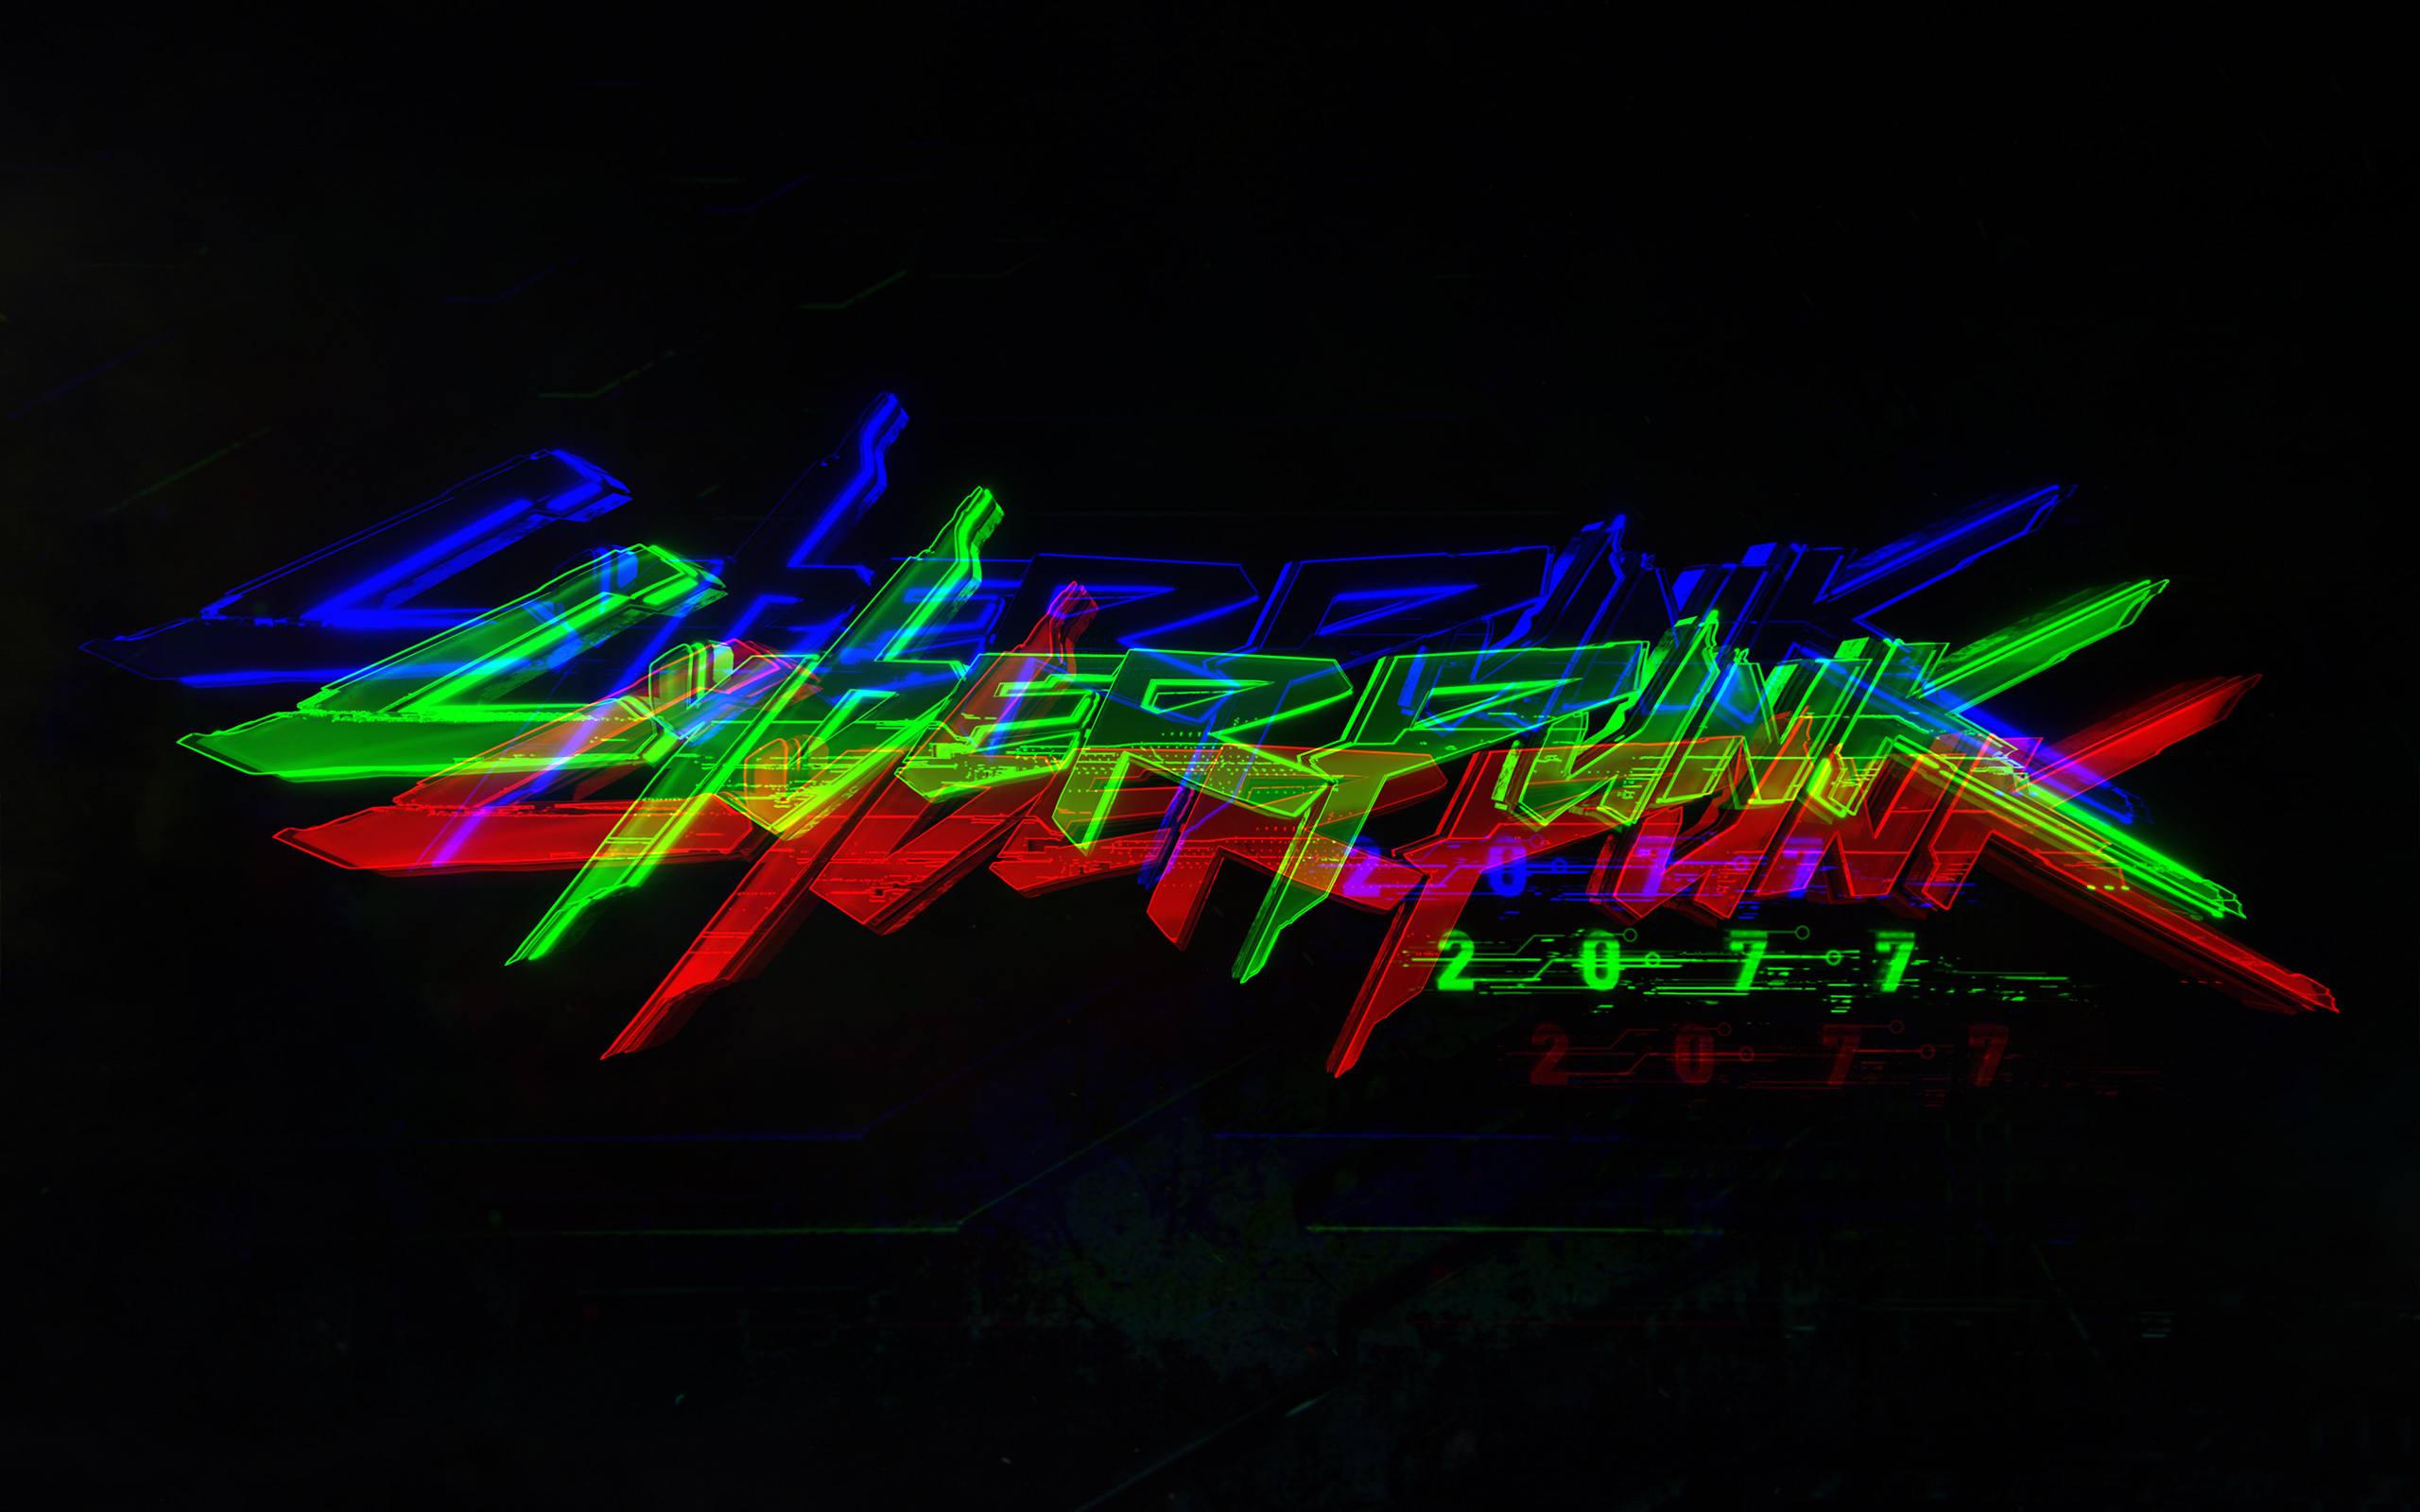 Free download Made a neat RGB edit of a Cyberpunk 2077 wallpaper